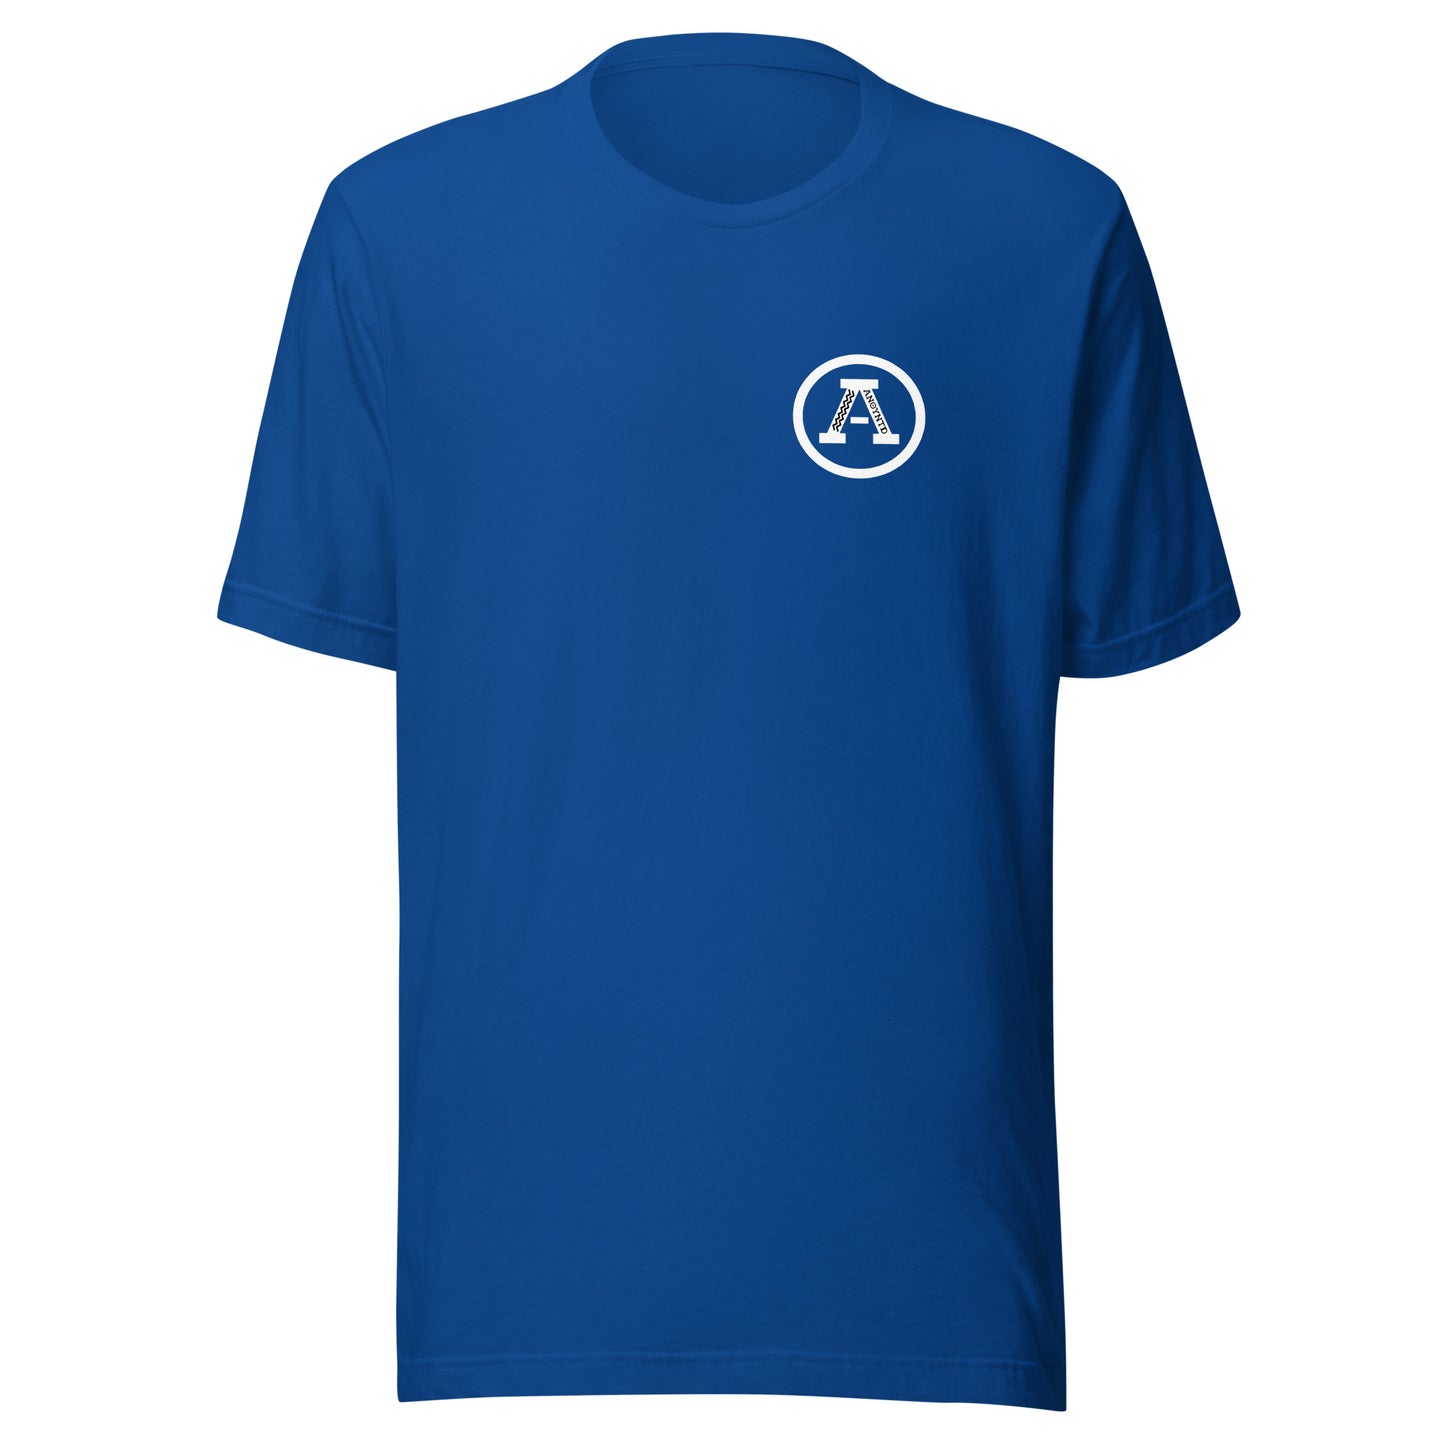 ANOYNTD Little Letterman (W) Unisex t-shirt